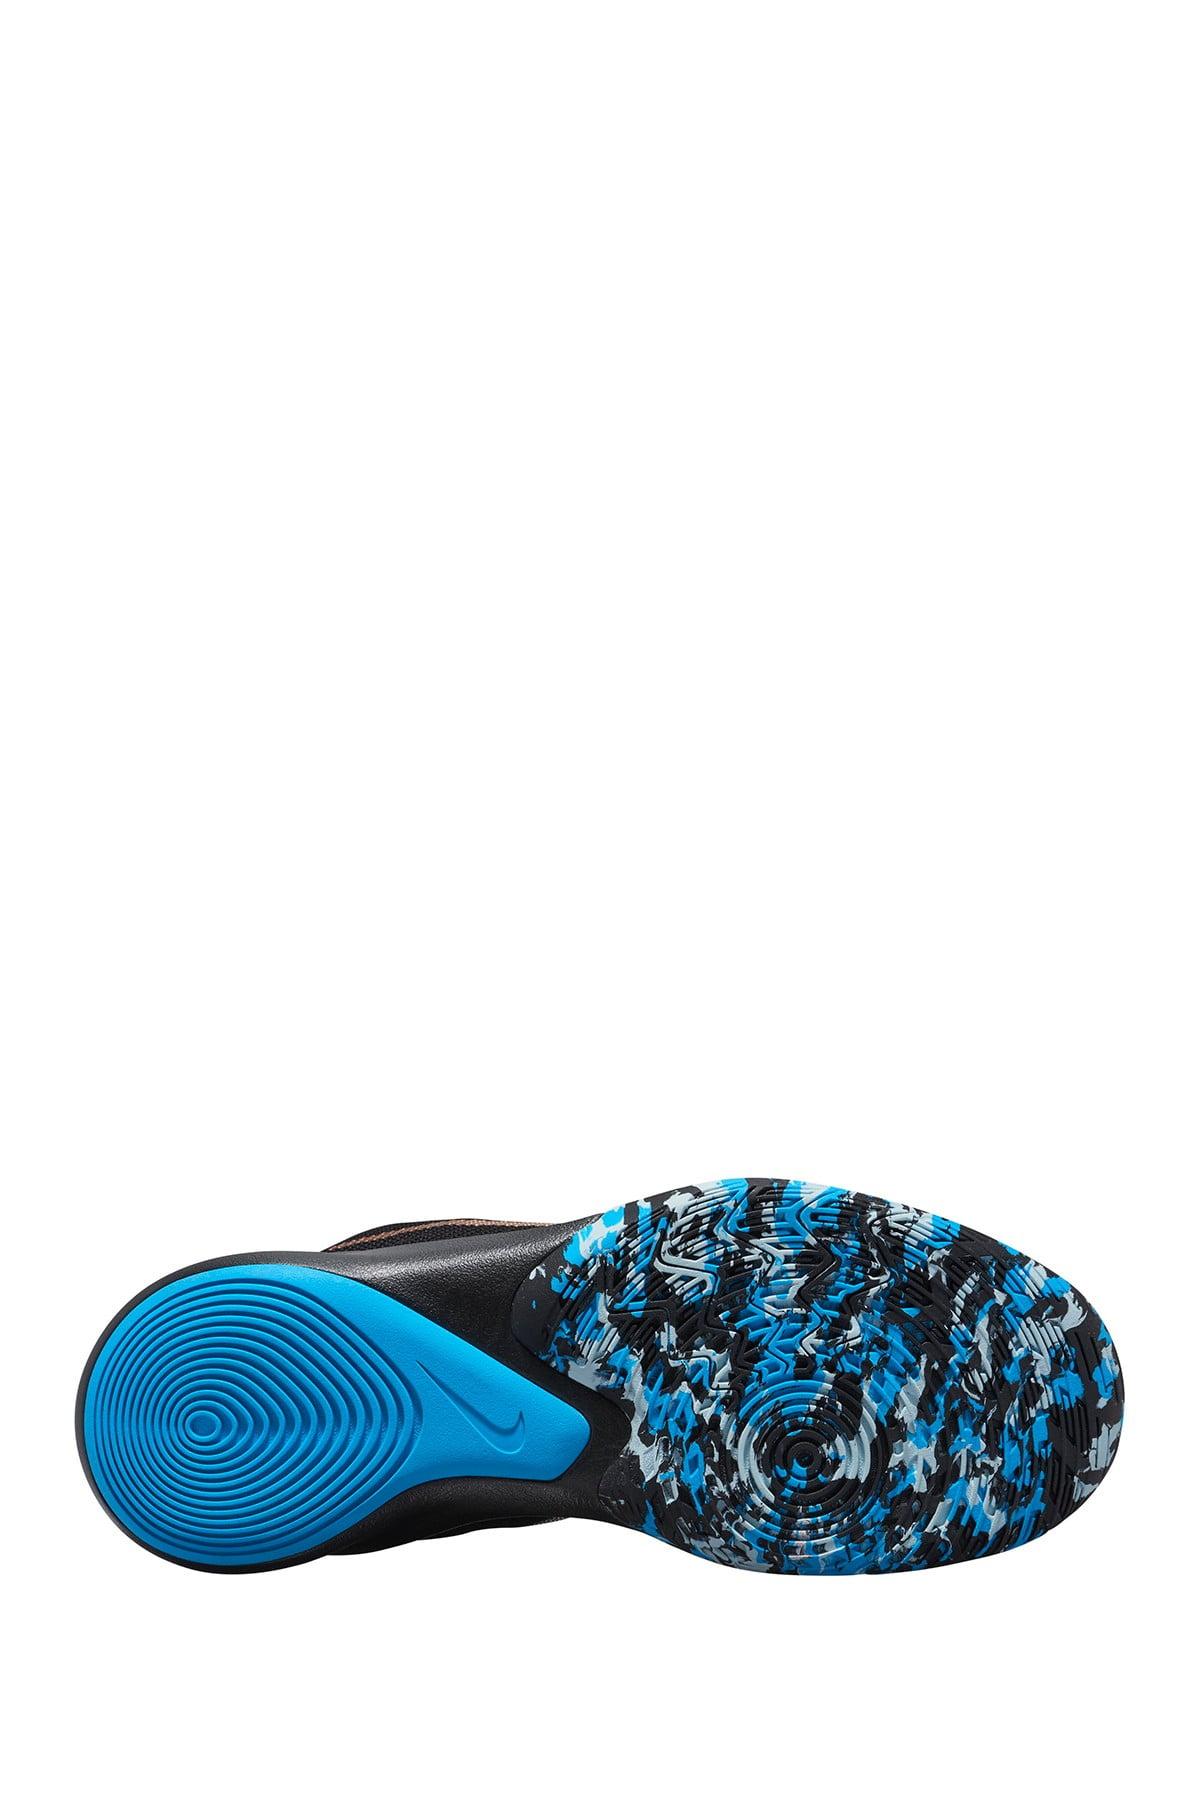 Nike Lace Precision Iii Basketball Sneaker in Blue for Men - Lyst